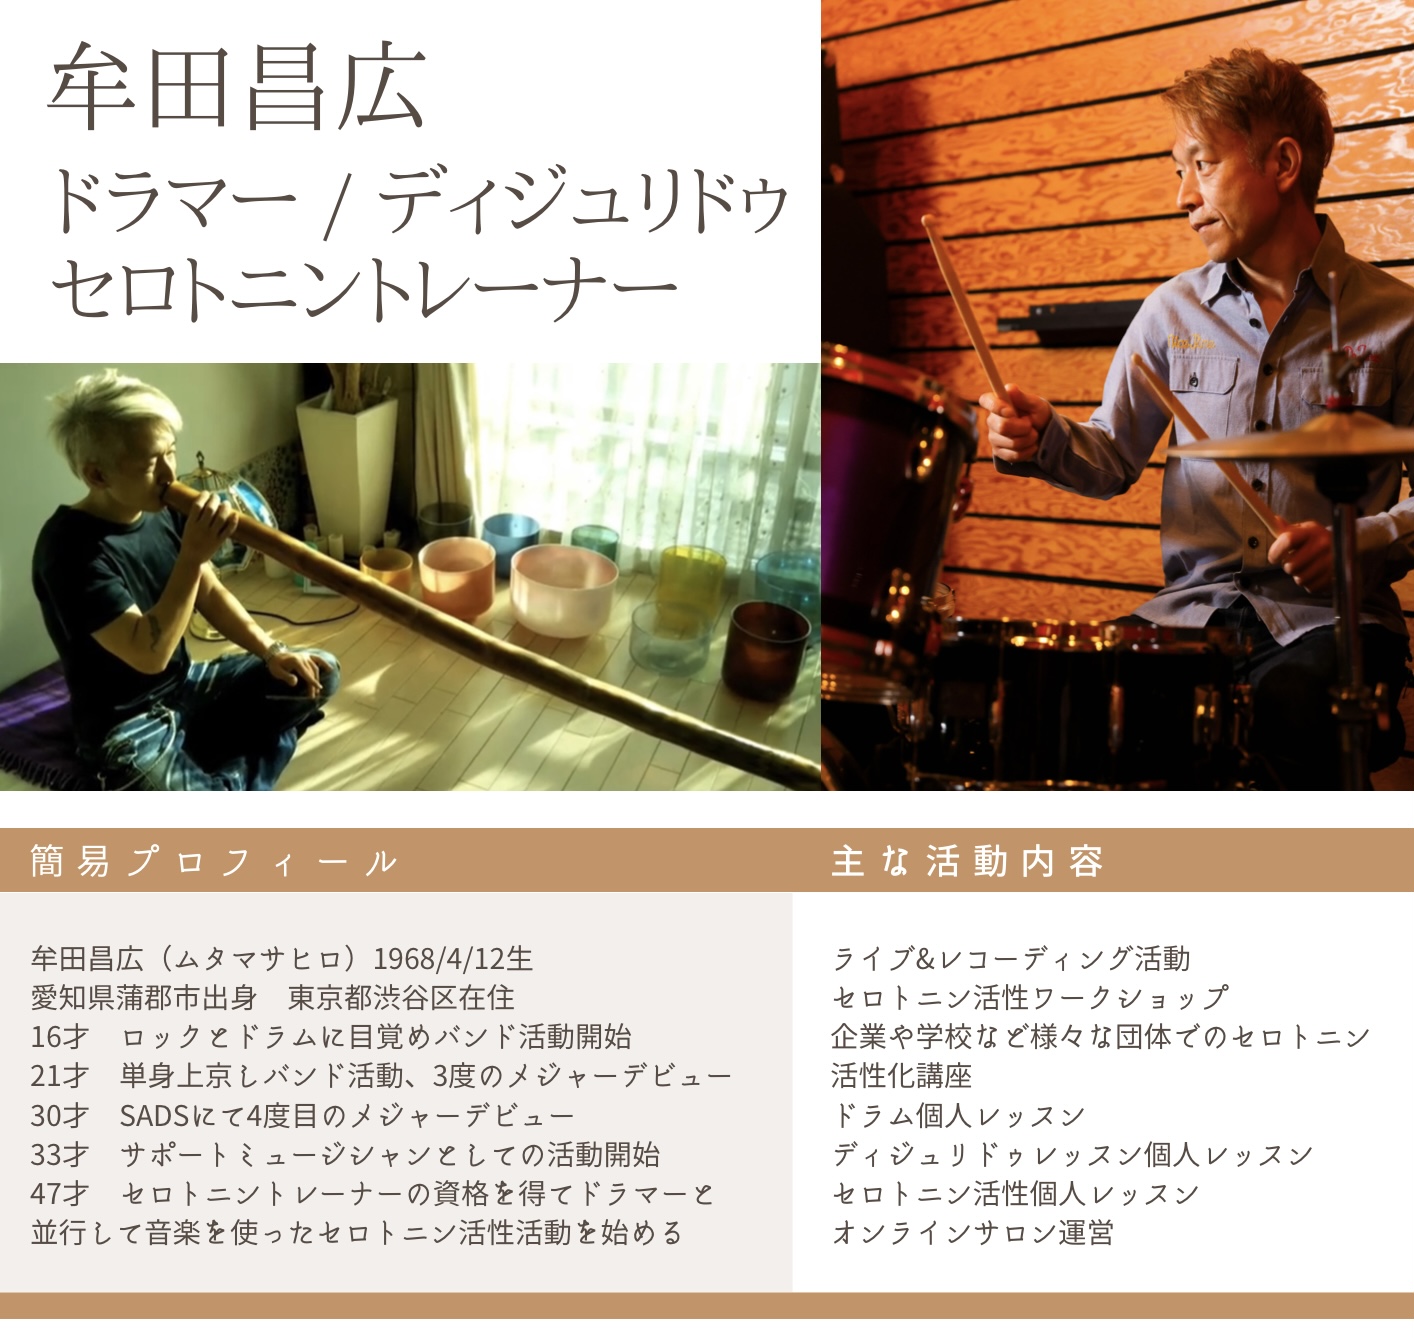 Masahiro Muta Official Web Site